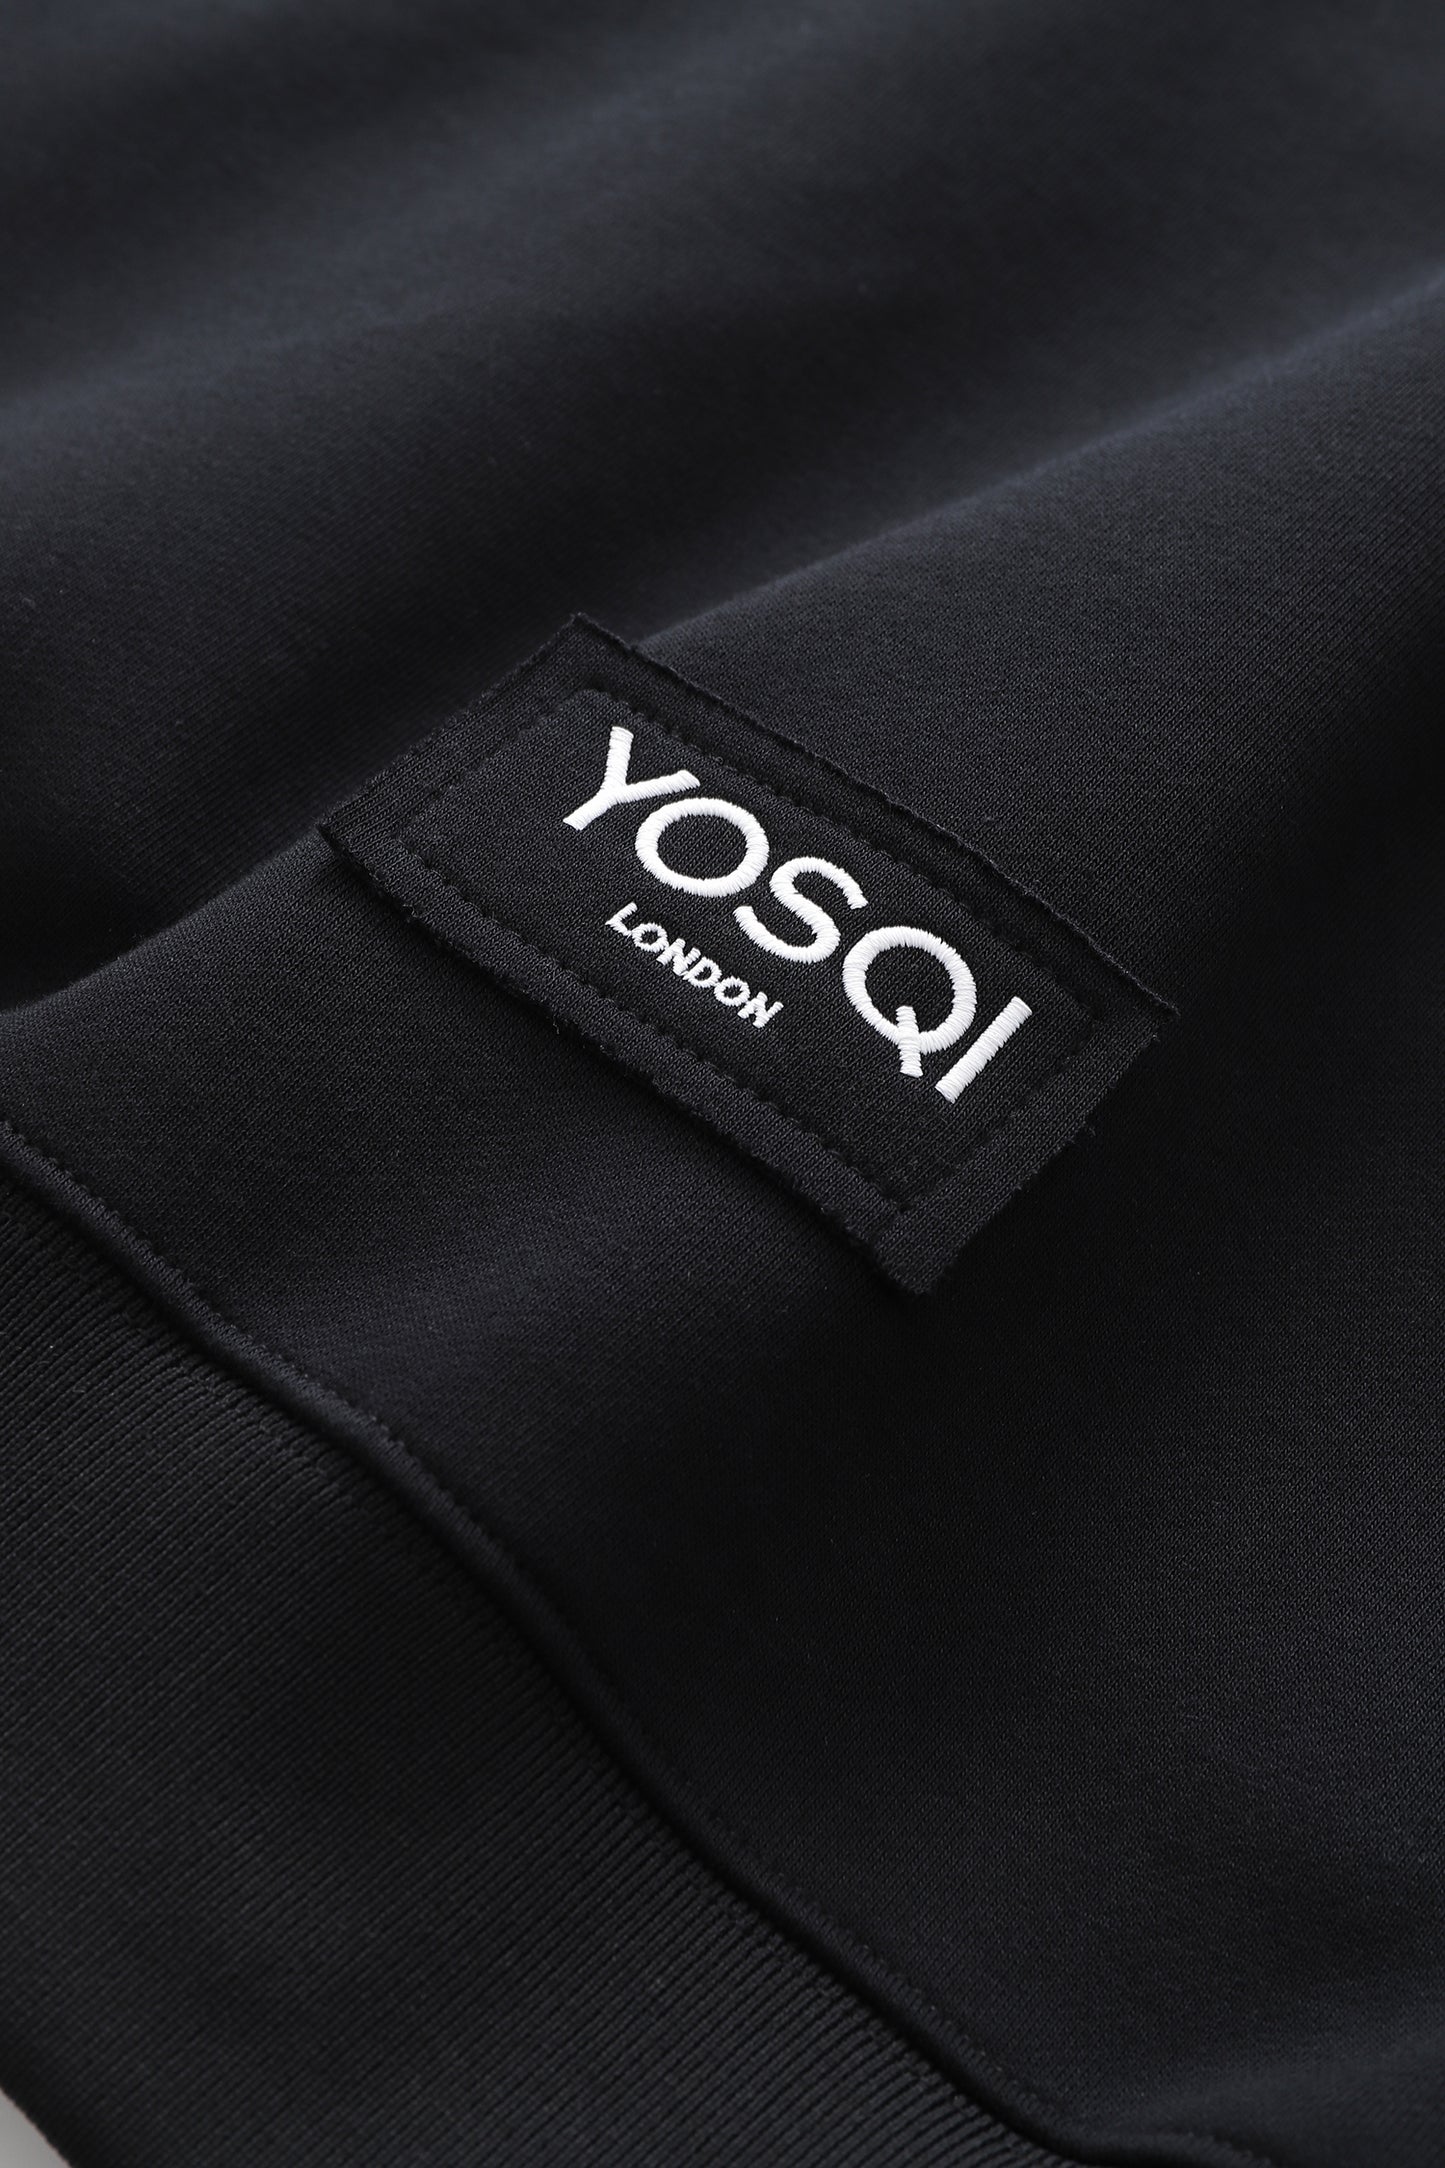 YOSQI Logo Patch Oversized Hoodie-Black